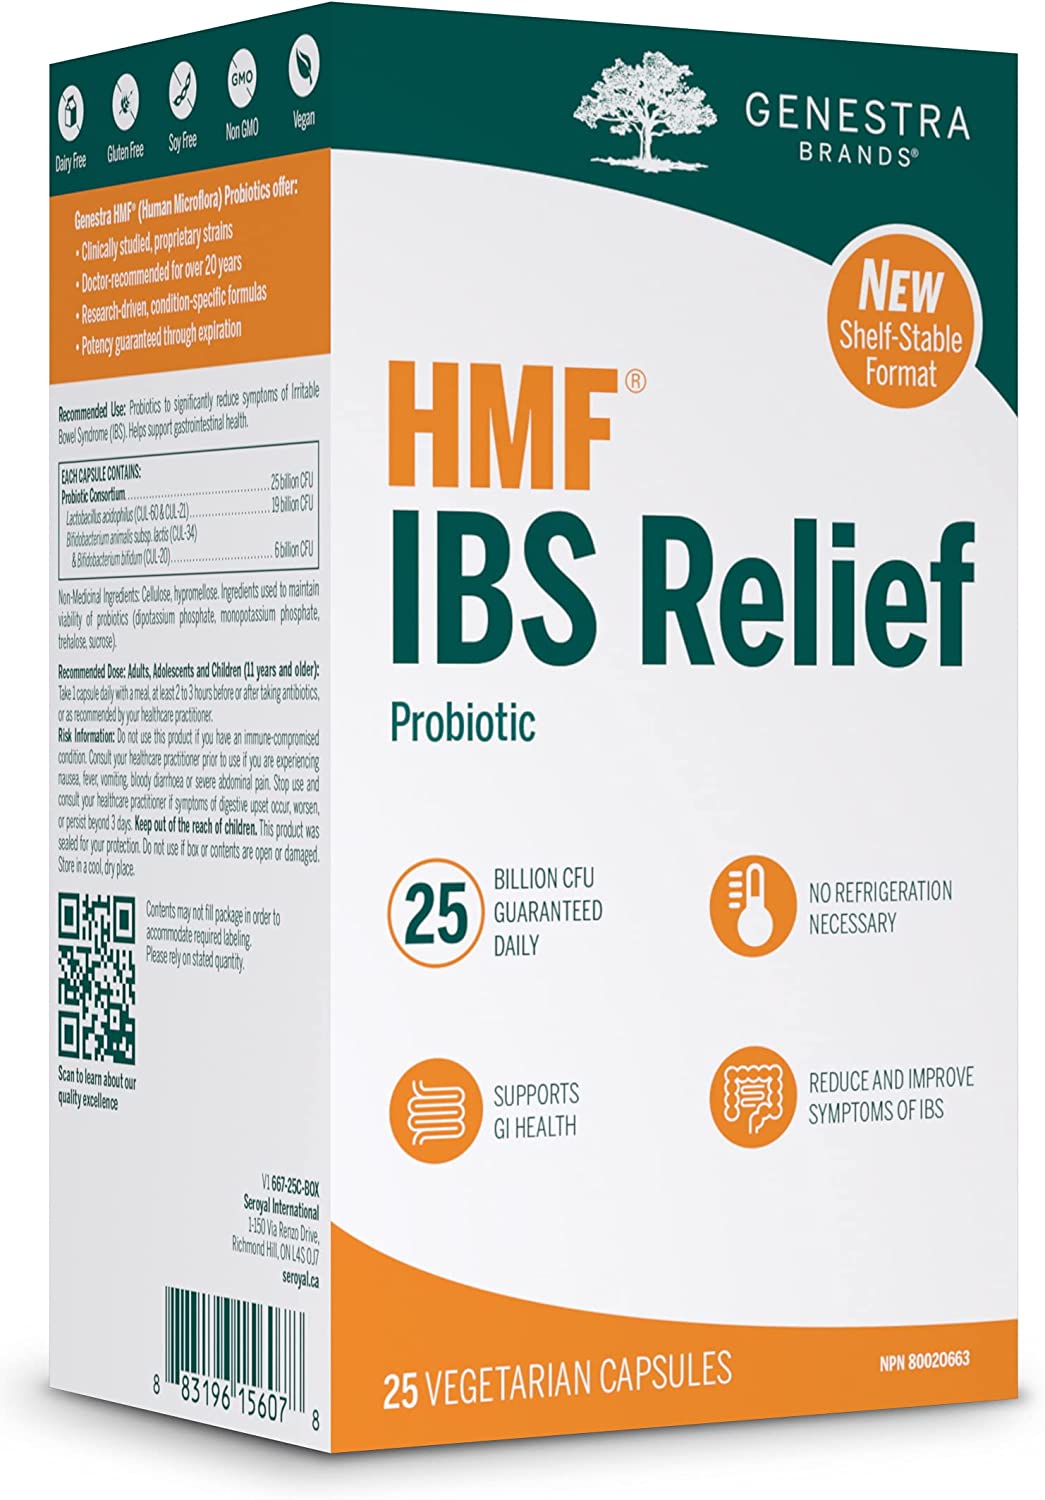 Genestra Brands HMF IBS Relief (lagerstabil)